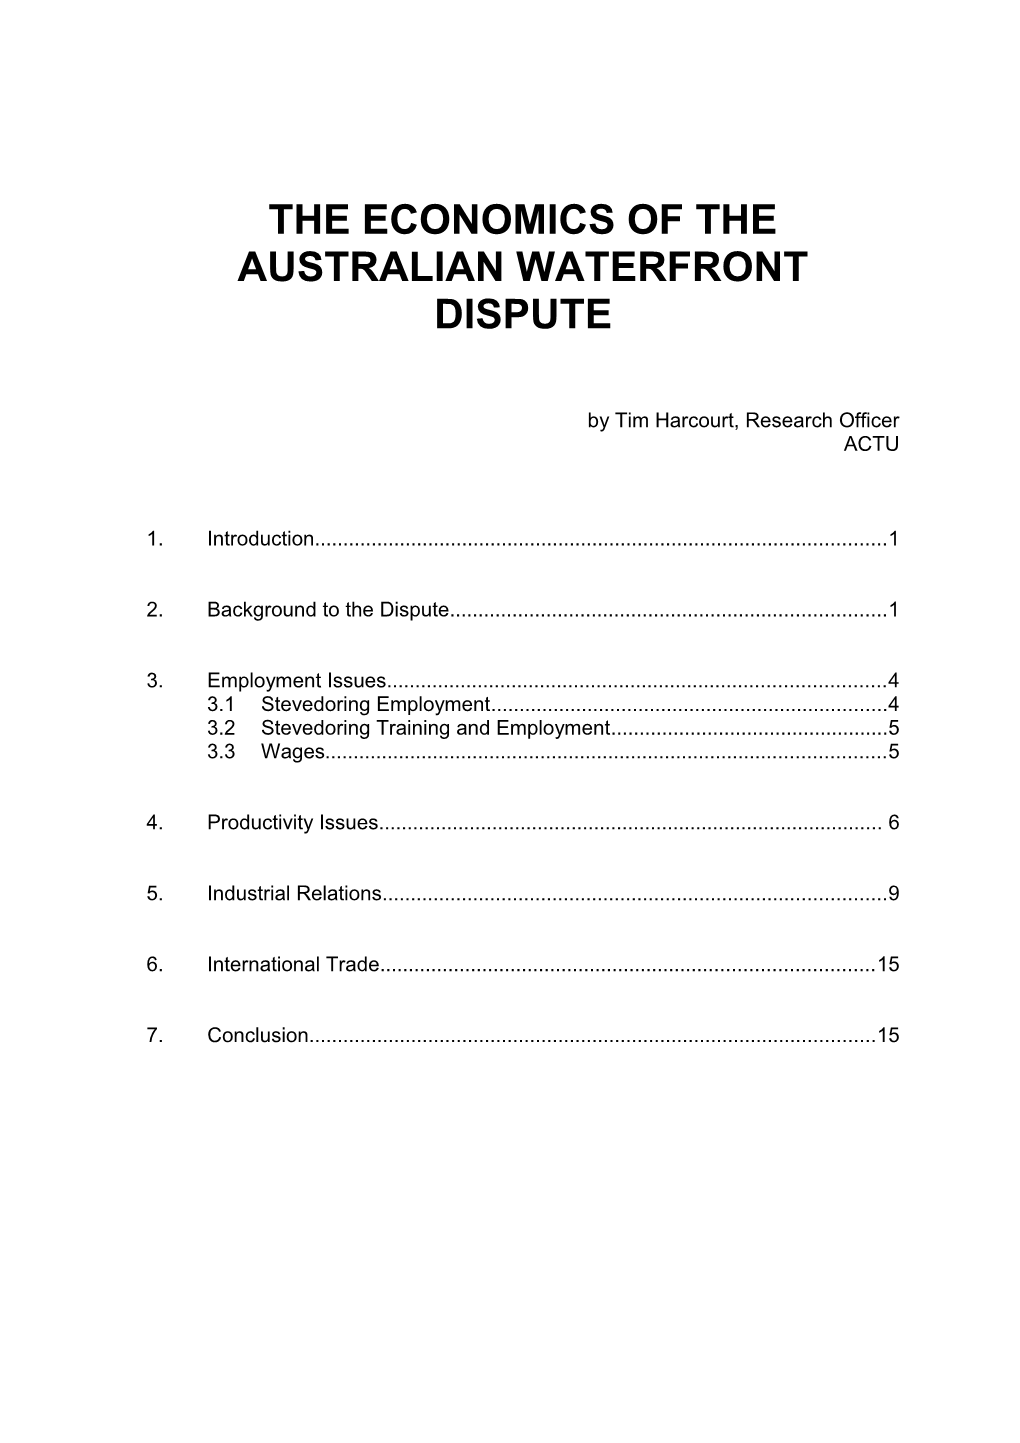 The Economics of the Australian Waterfront Dispute